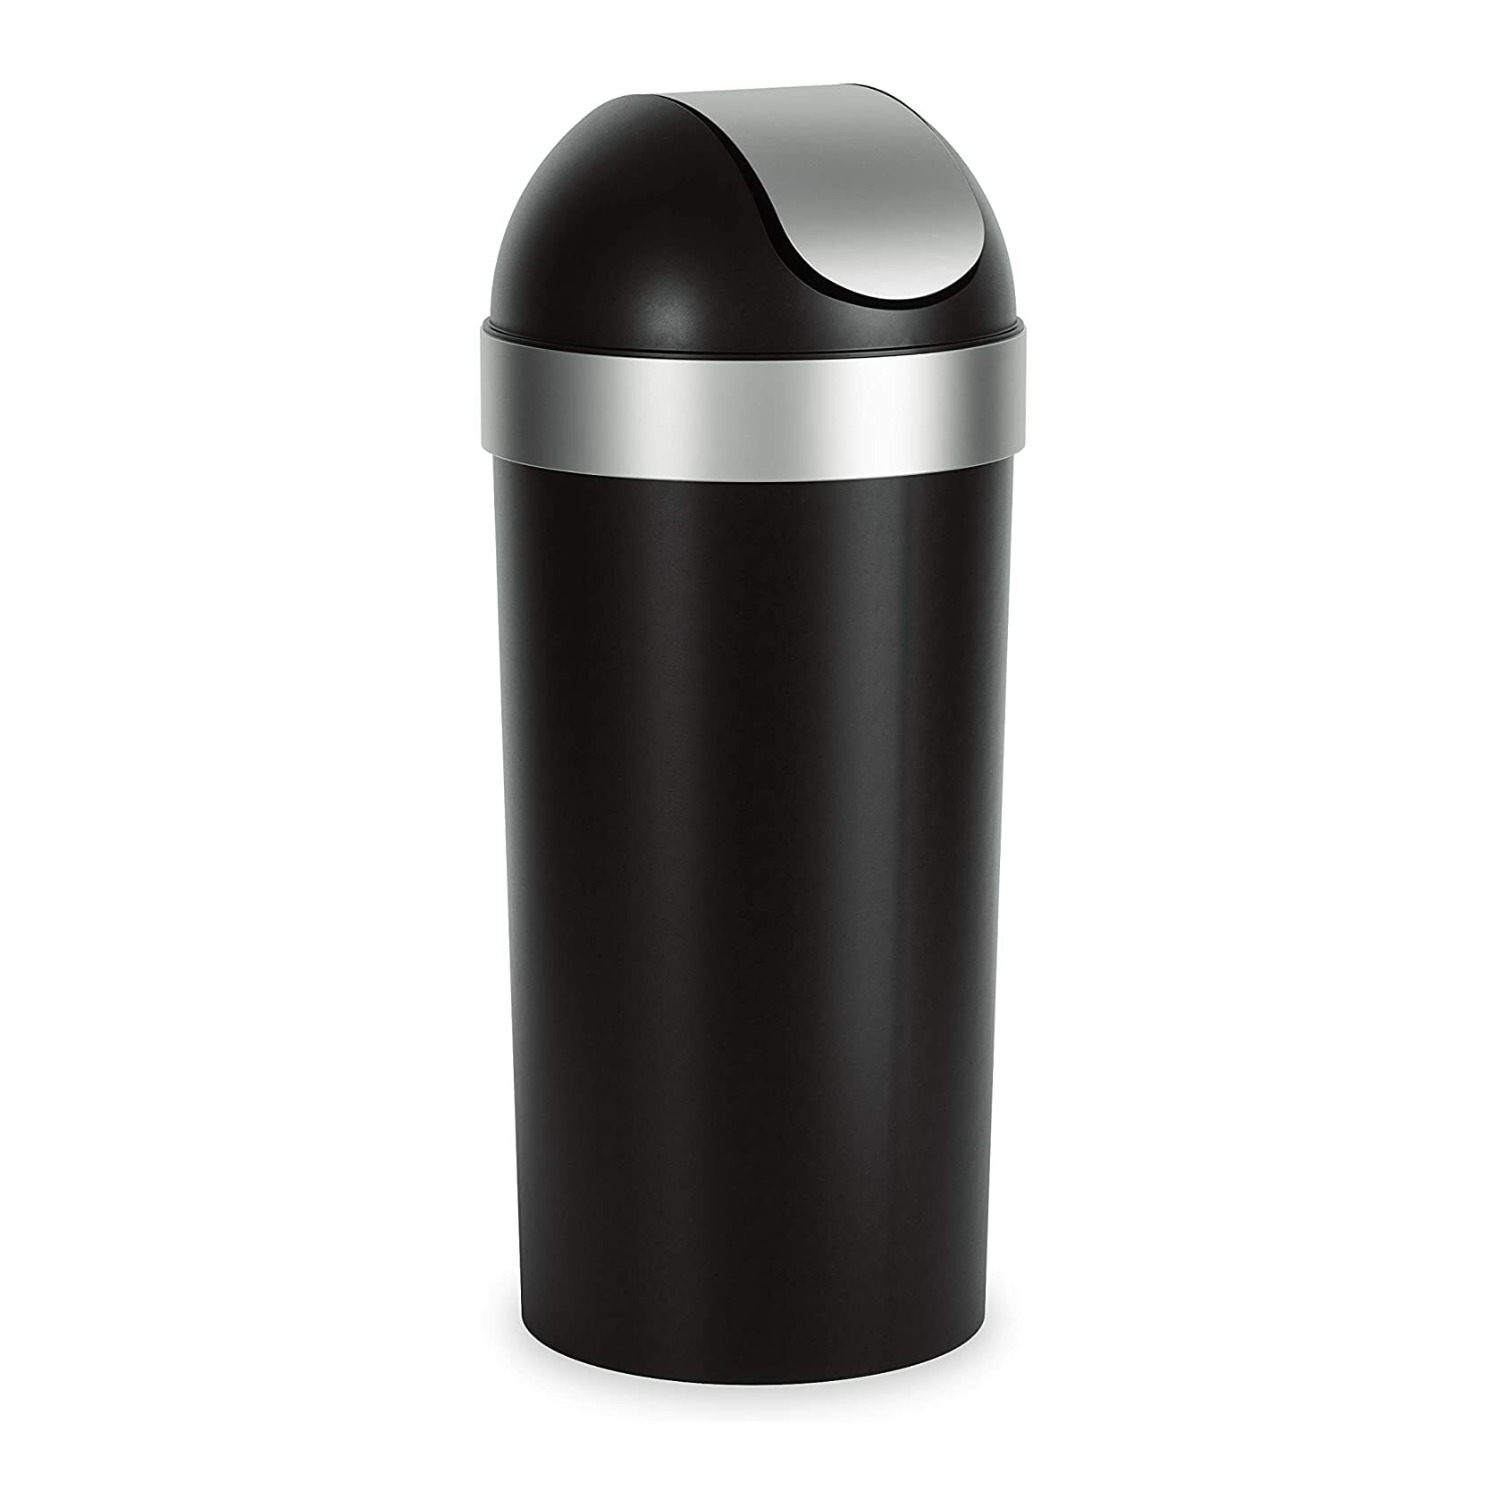 Umbra Venti 16.5-Gallon Swing Top Kitchen Trash Can (Large, Black/Nickel)